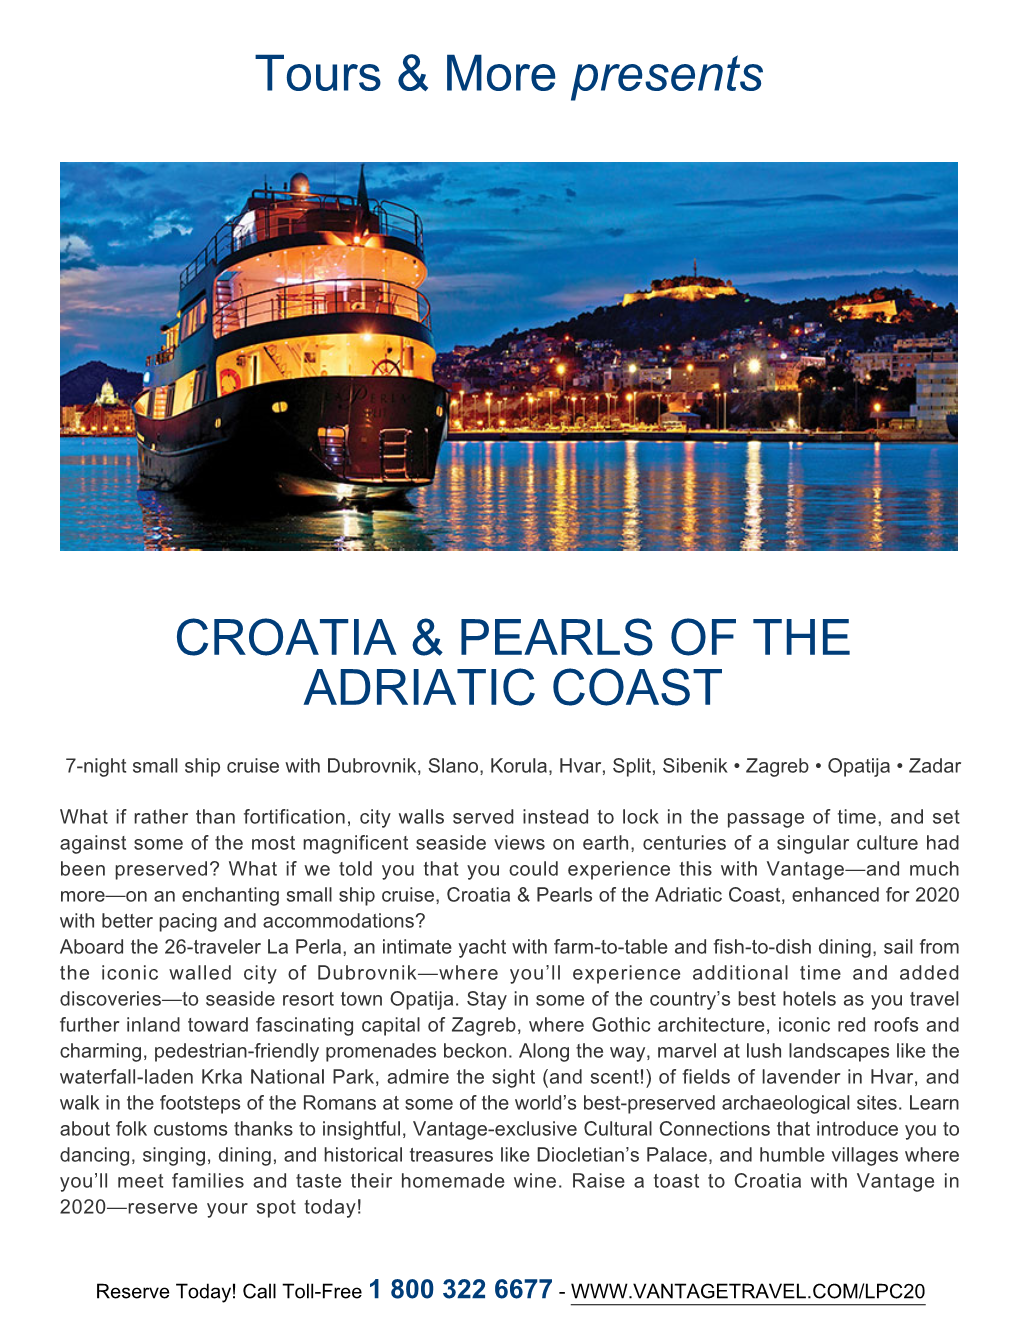 CROATIA & PEARLS of the ADRIATIC COAST Tours